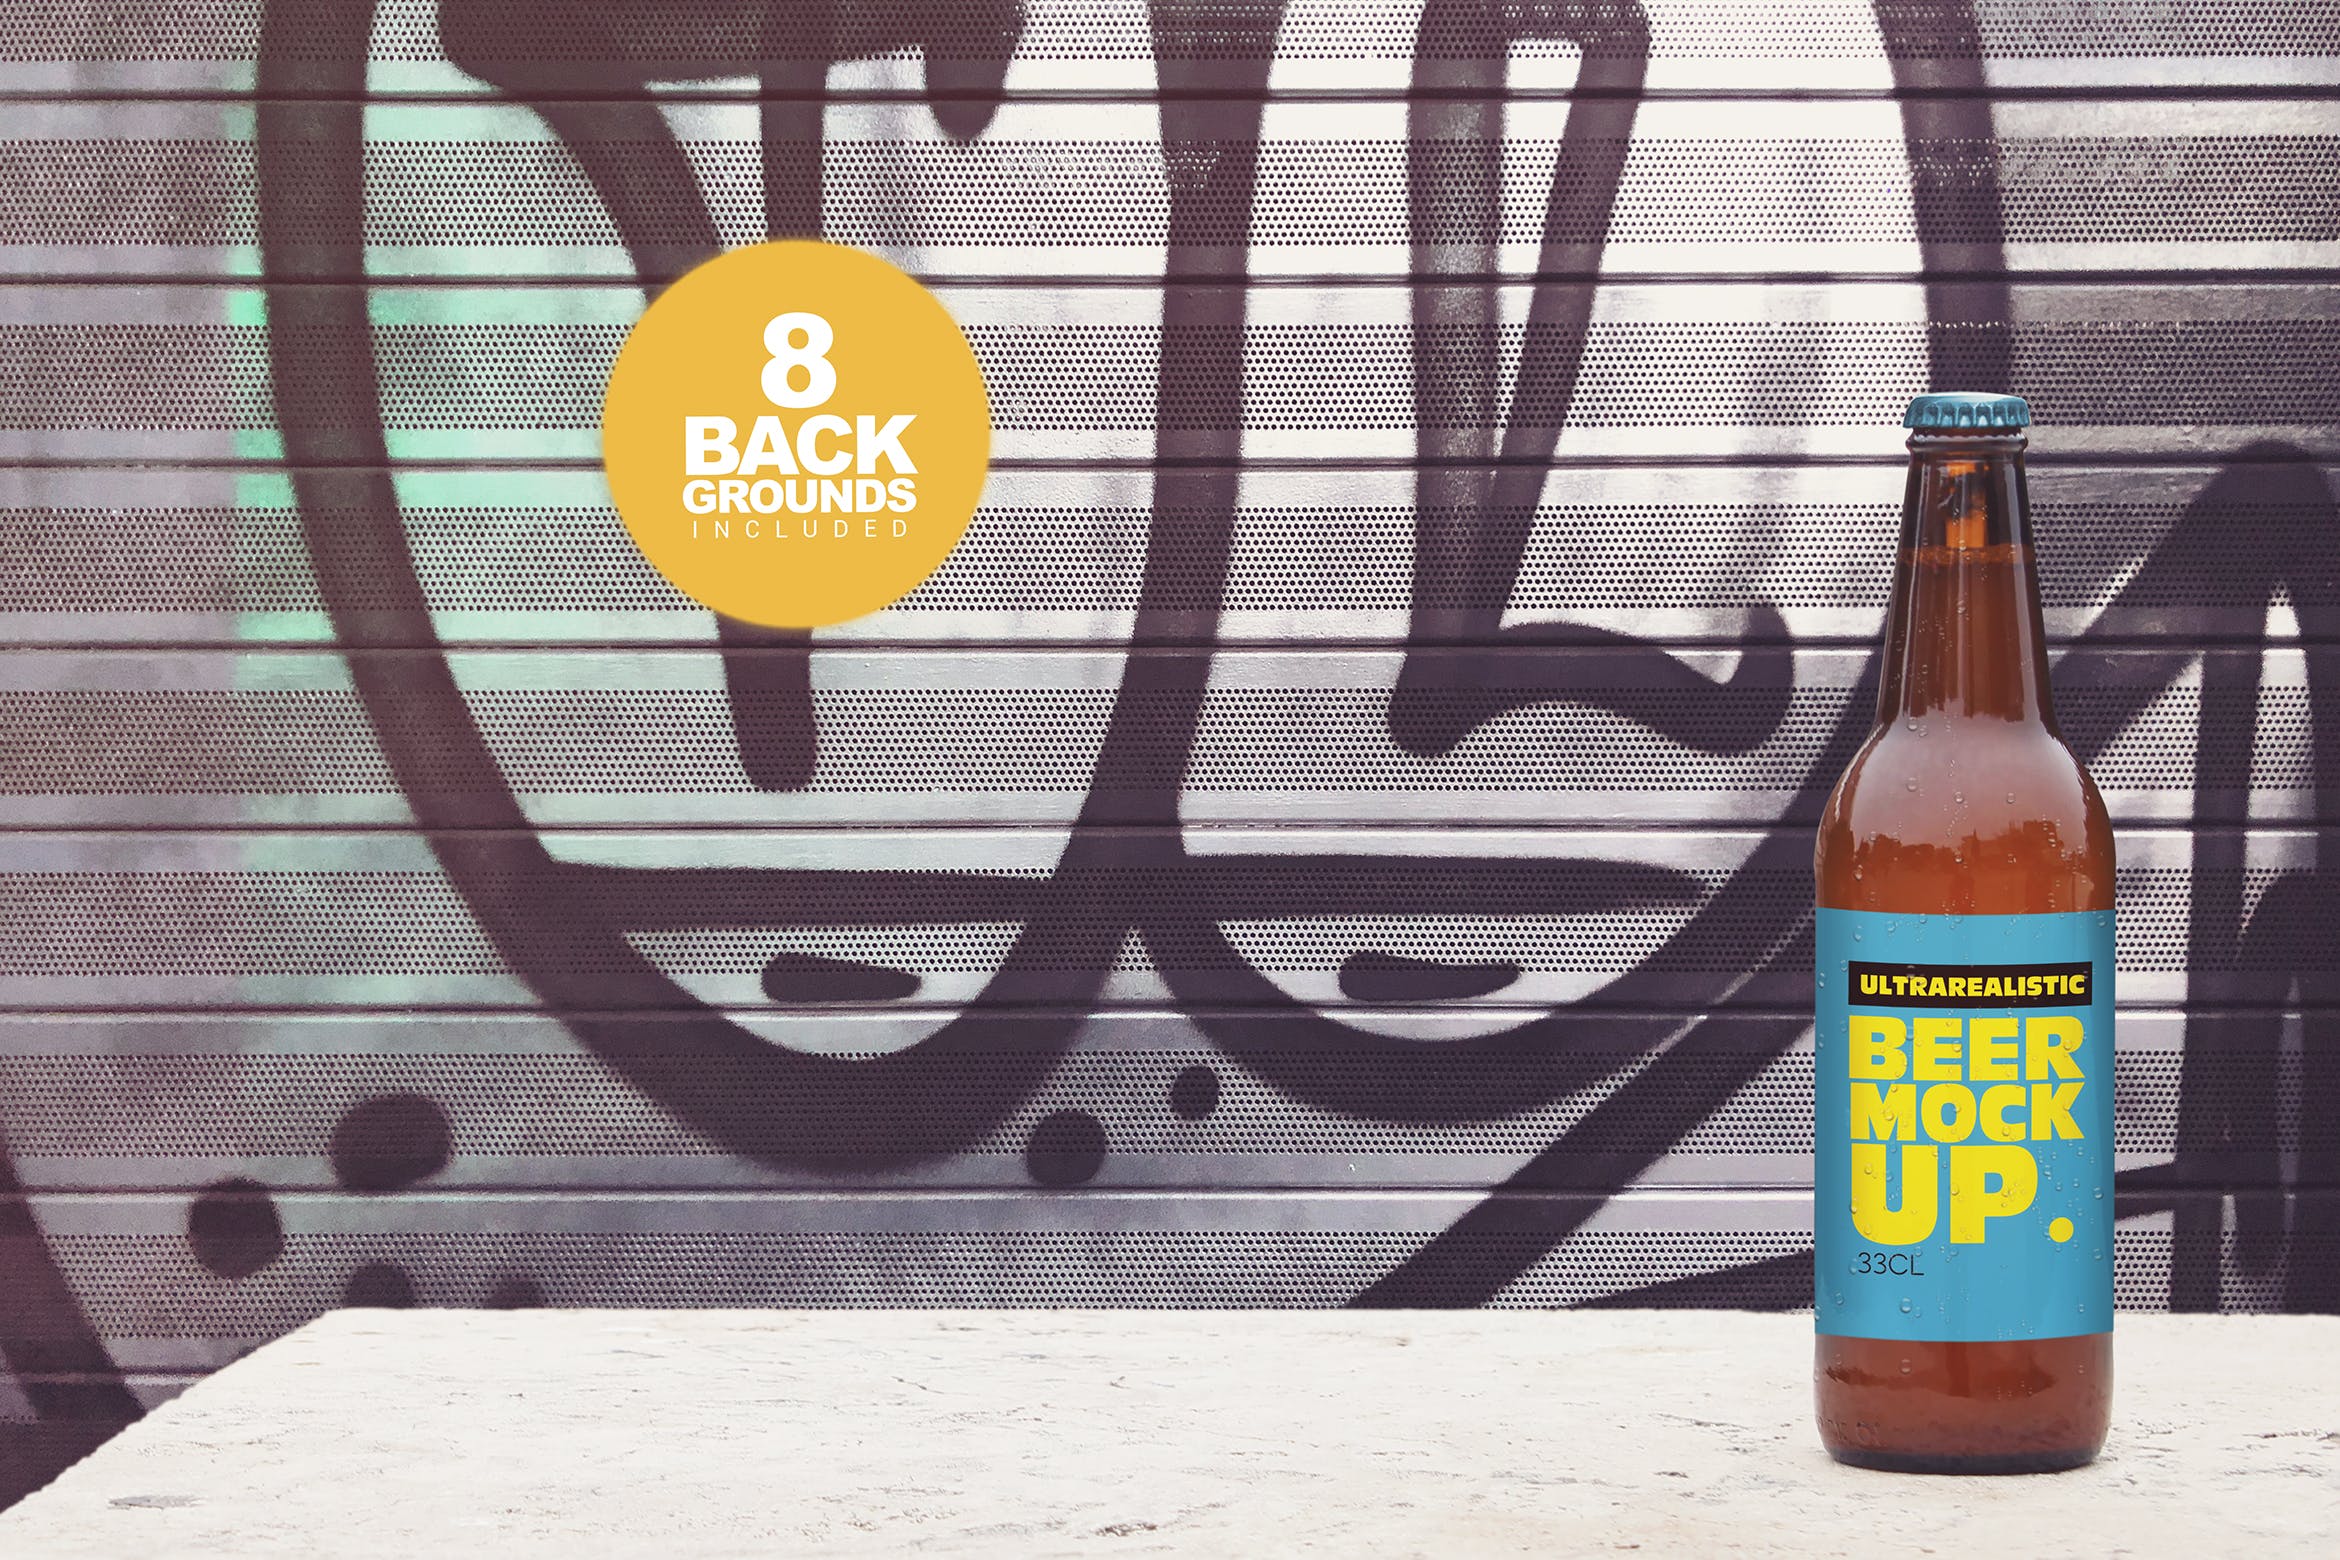 50cl啤酒瓶外观设计预览第一素材精选 50cl Garage Beer Mockup插图